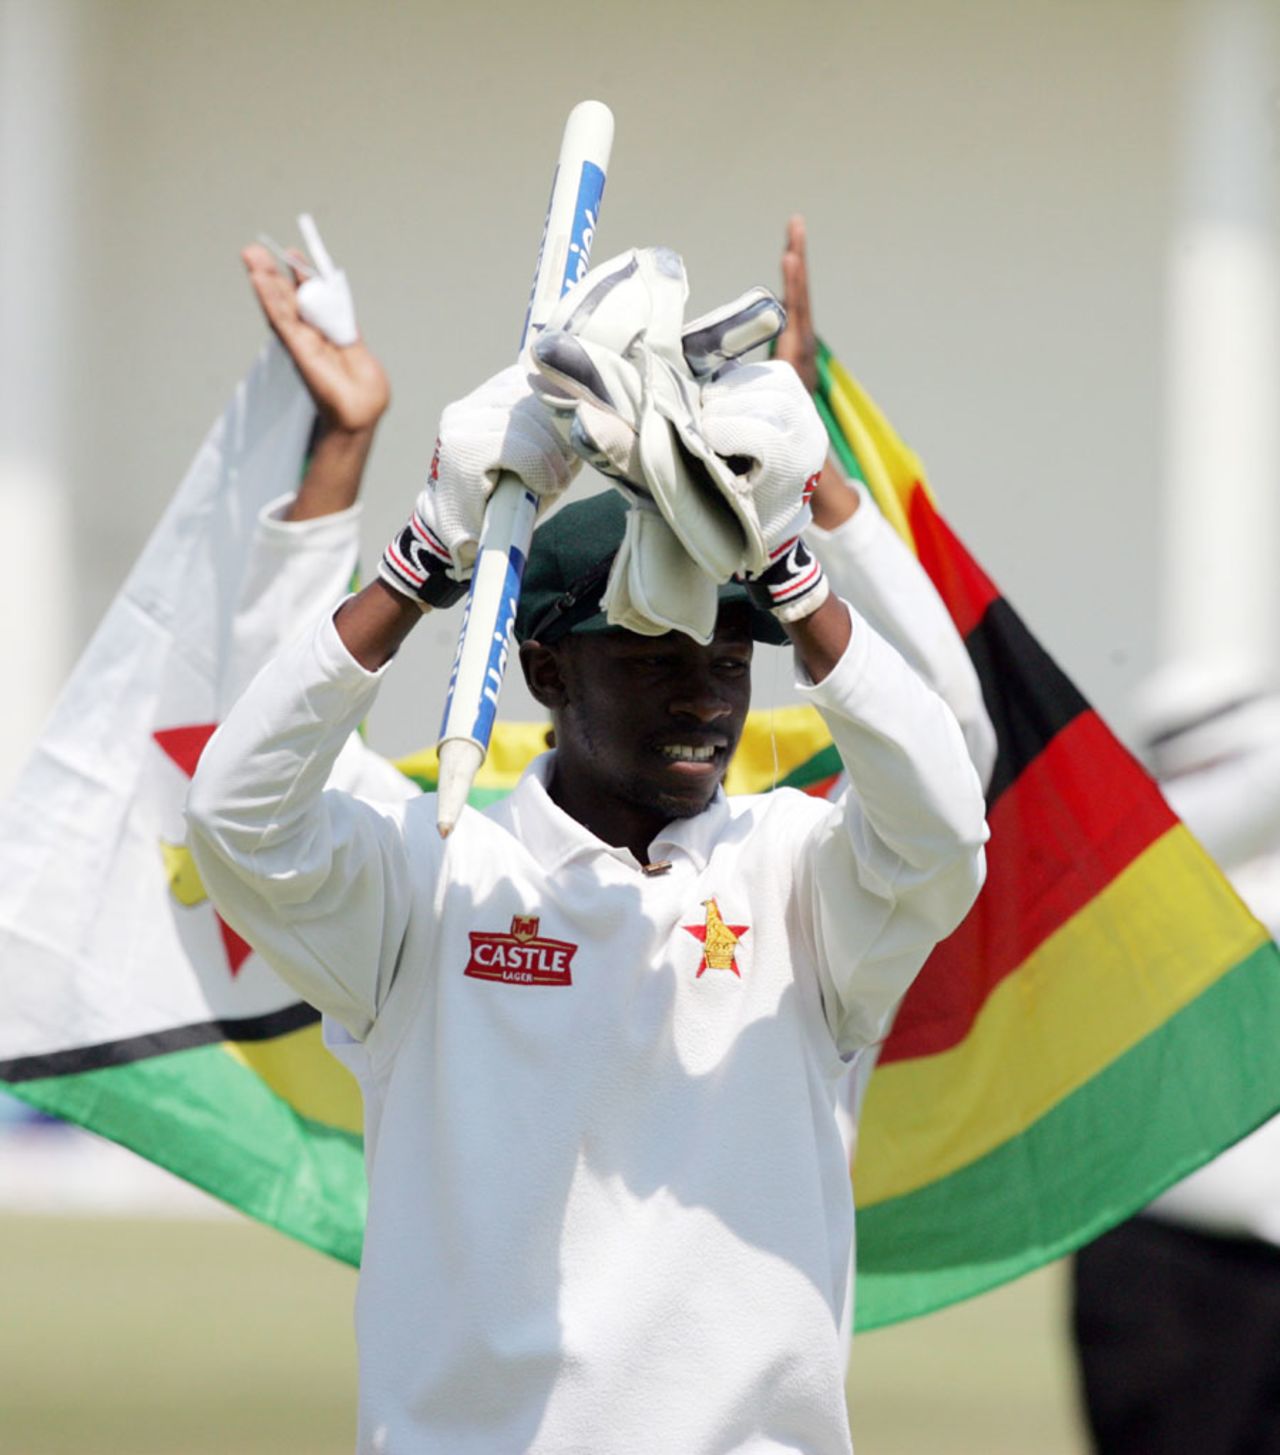 Richmond Mutumbami with the Zimbabwe flag behind him, Zimbabwe v Pakistan, 2nd Test, Harare, 5th day, September 14, 2013